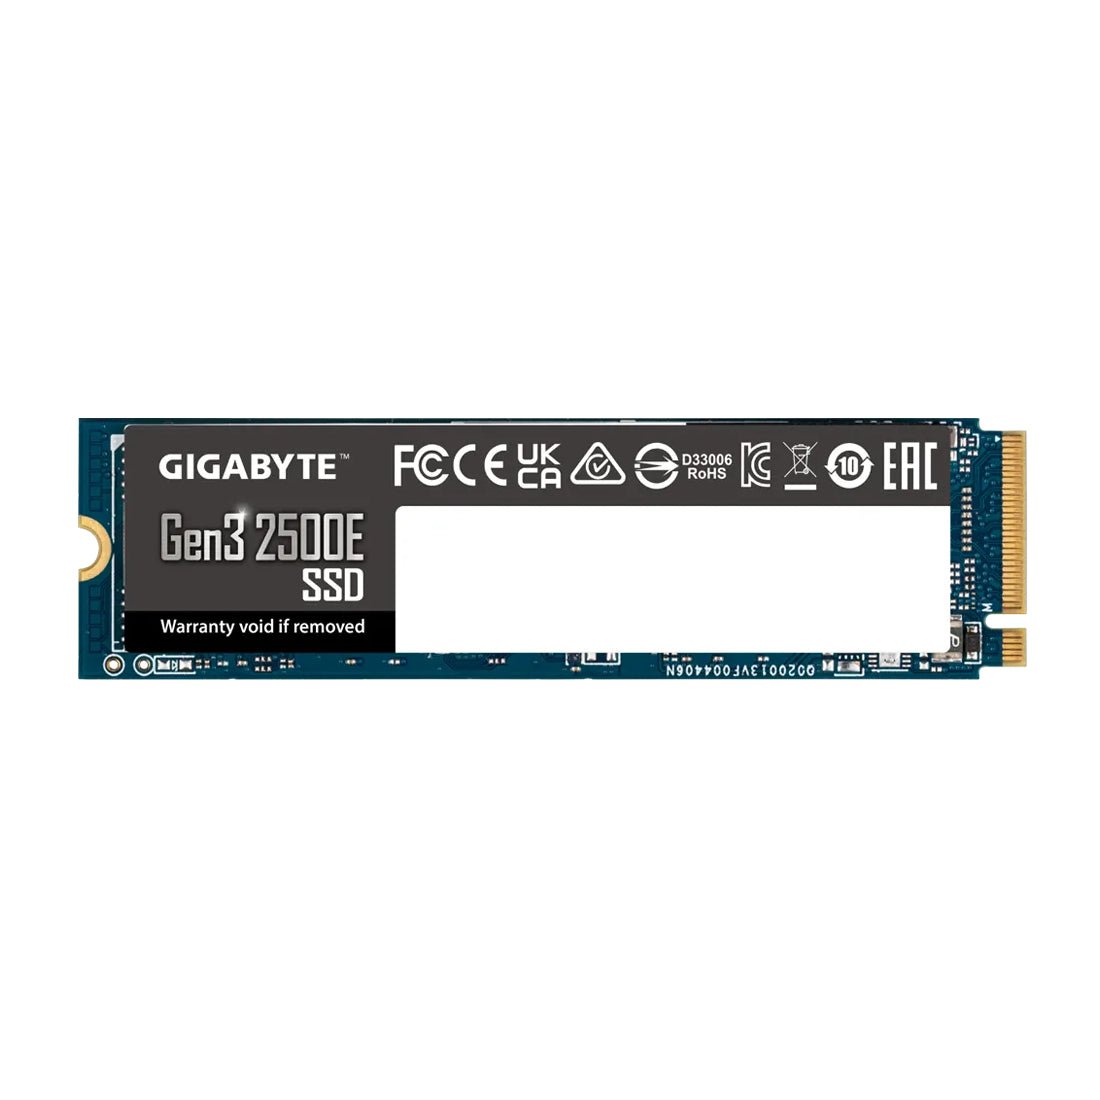 Gigabyte Aorus 2500E 500GB Gen 3 2300/1500 MB/s Internal SSD - مساحة تخزين - Store 974 | ستور ٩٧٤